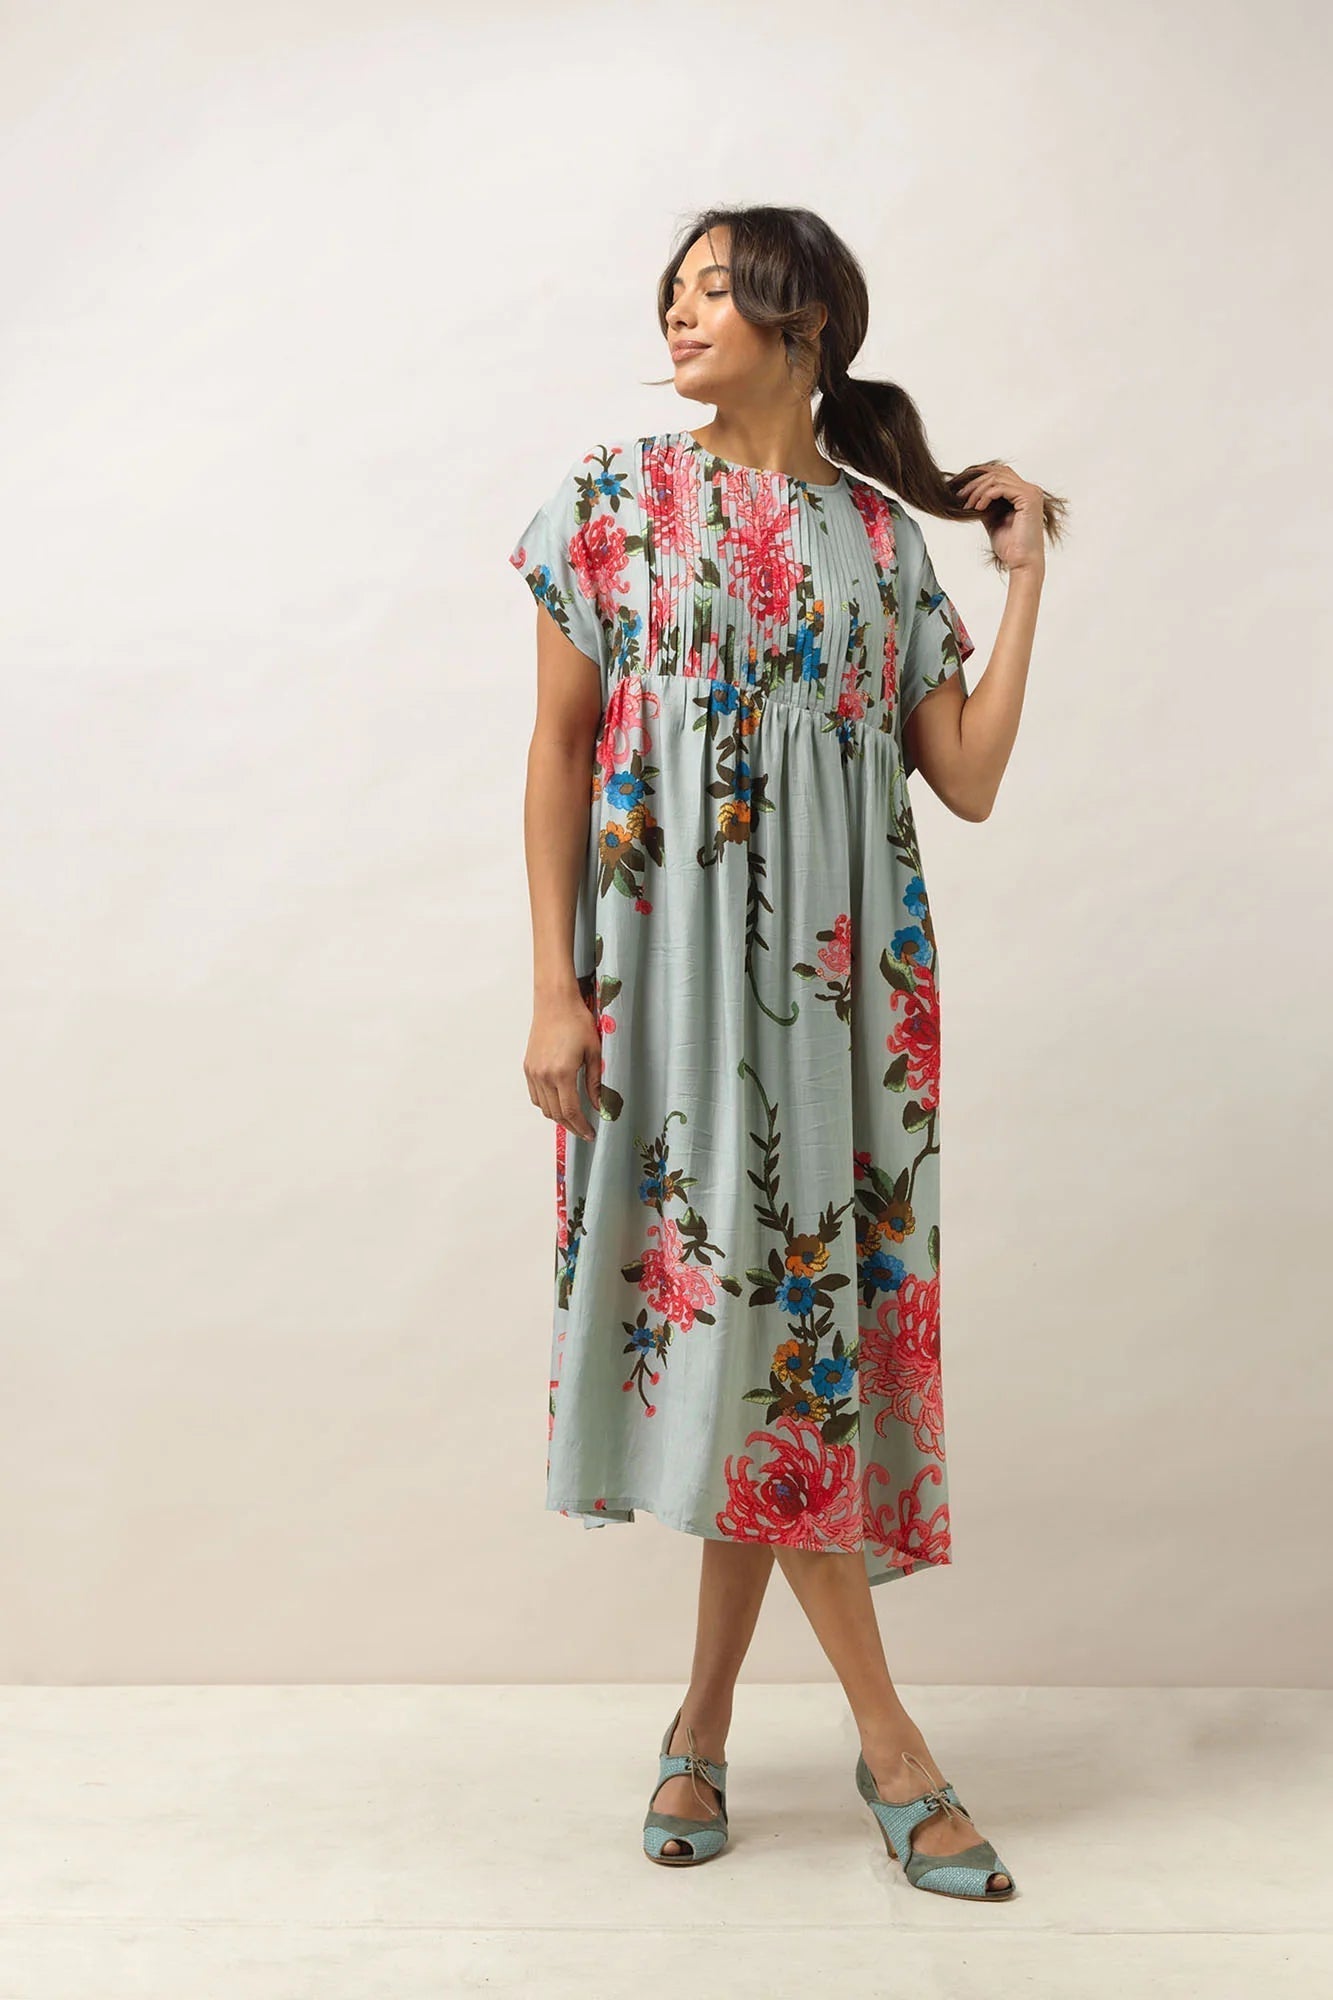 Chrysanthemum Aqua Pleat Dress - The Nancy Smillie Shop - Art, Jewellery & Designer Gifts Glasgow